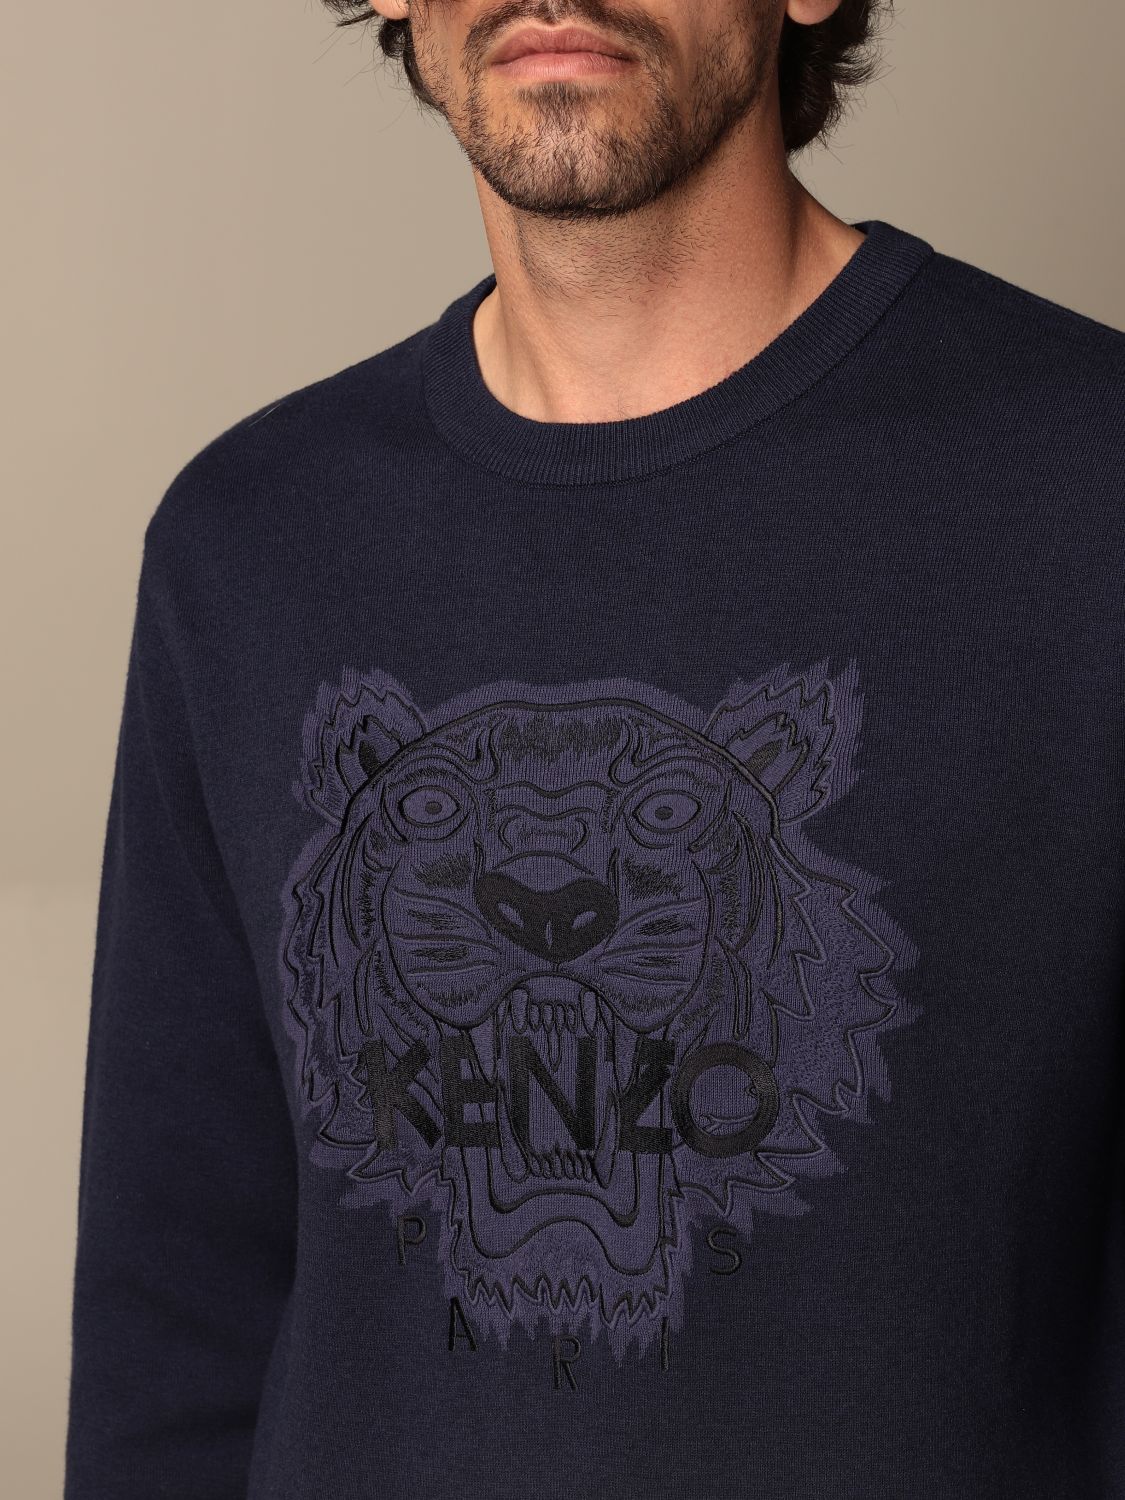 Kenzo Paris Sweater Clearance, 52% OFF | www.velocityusa.com